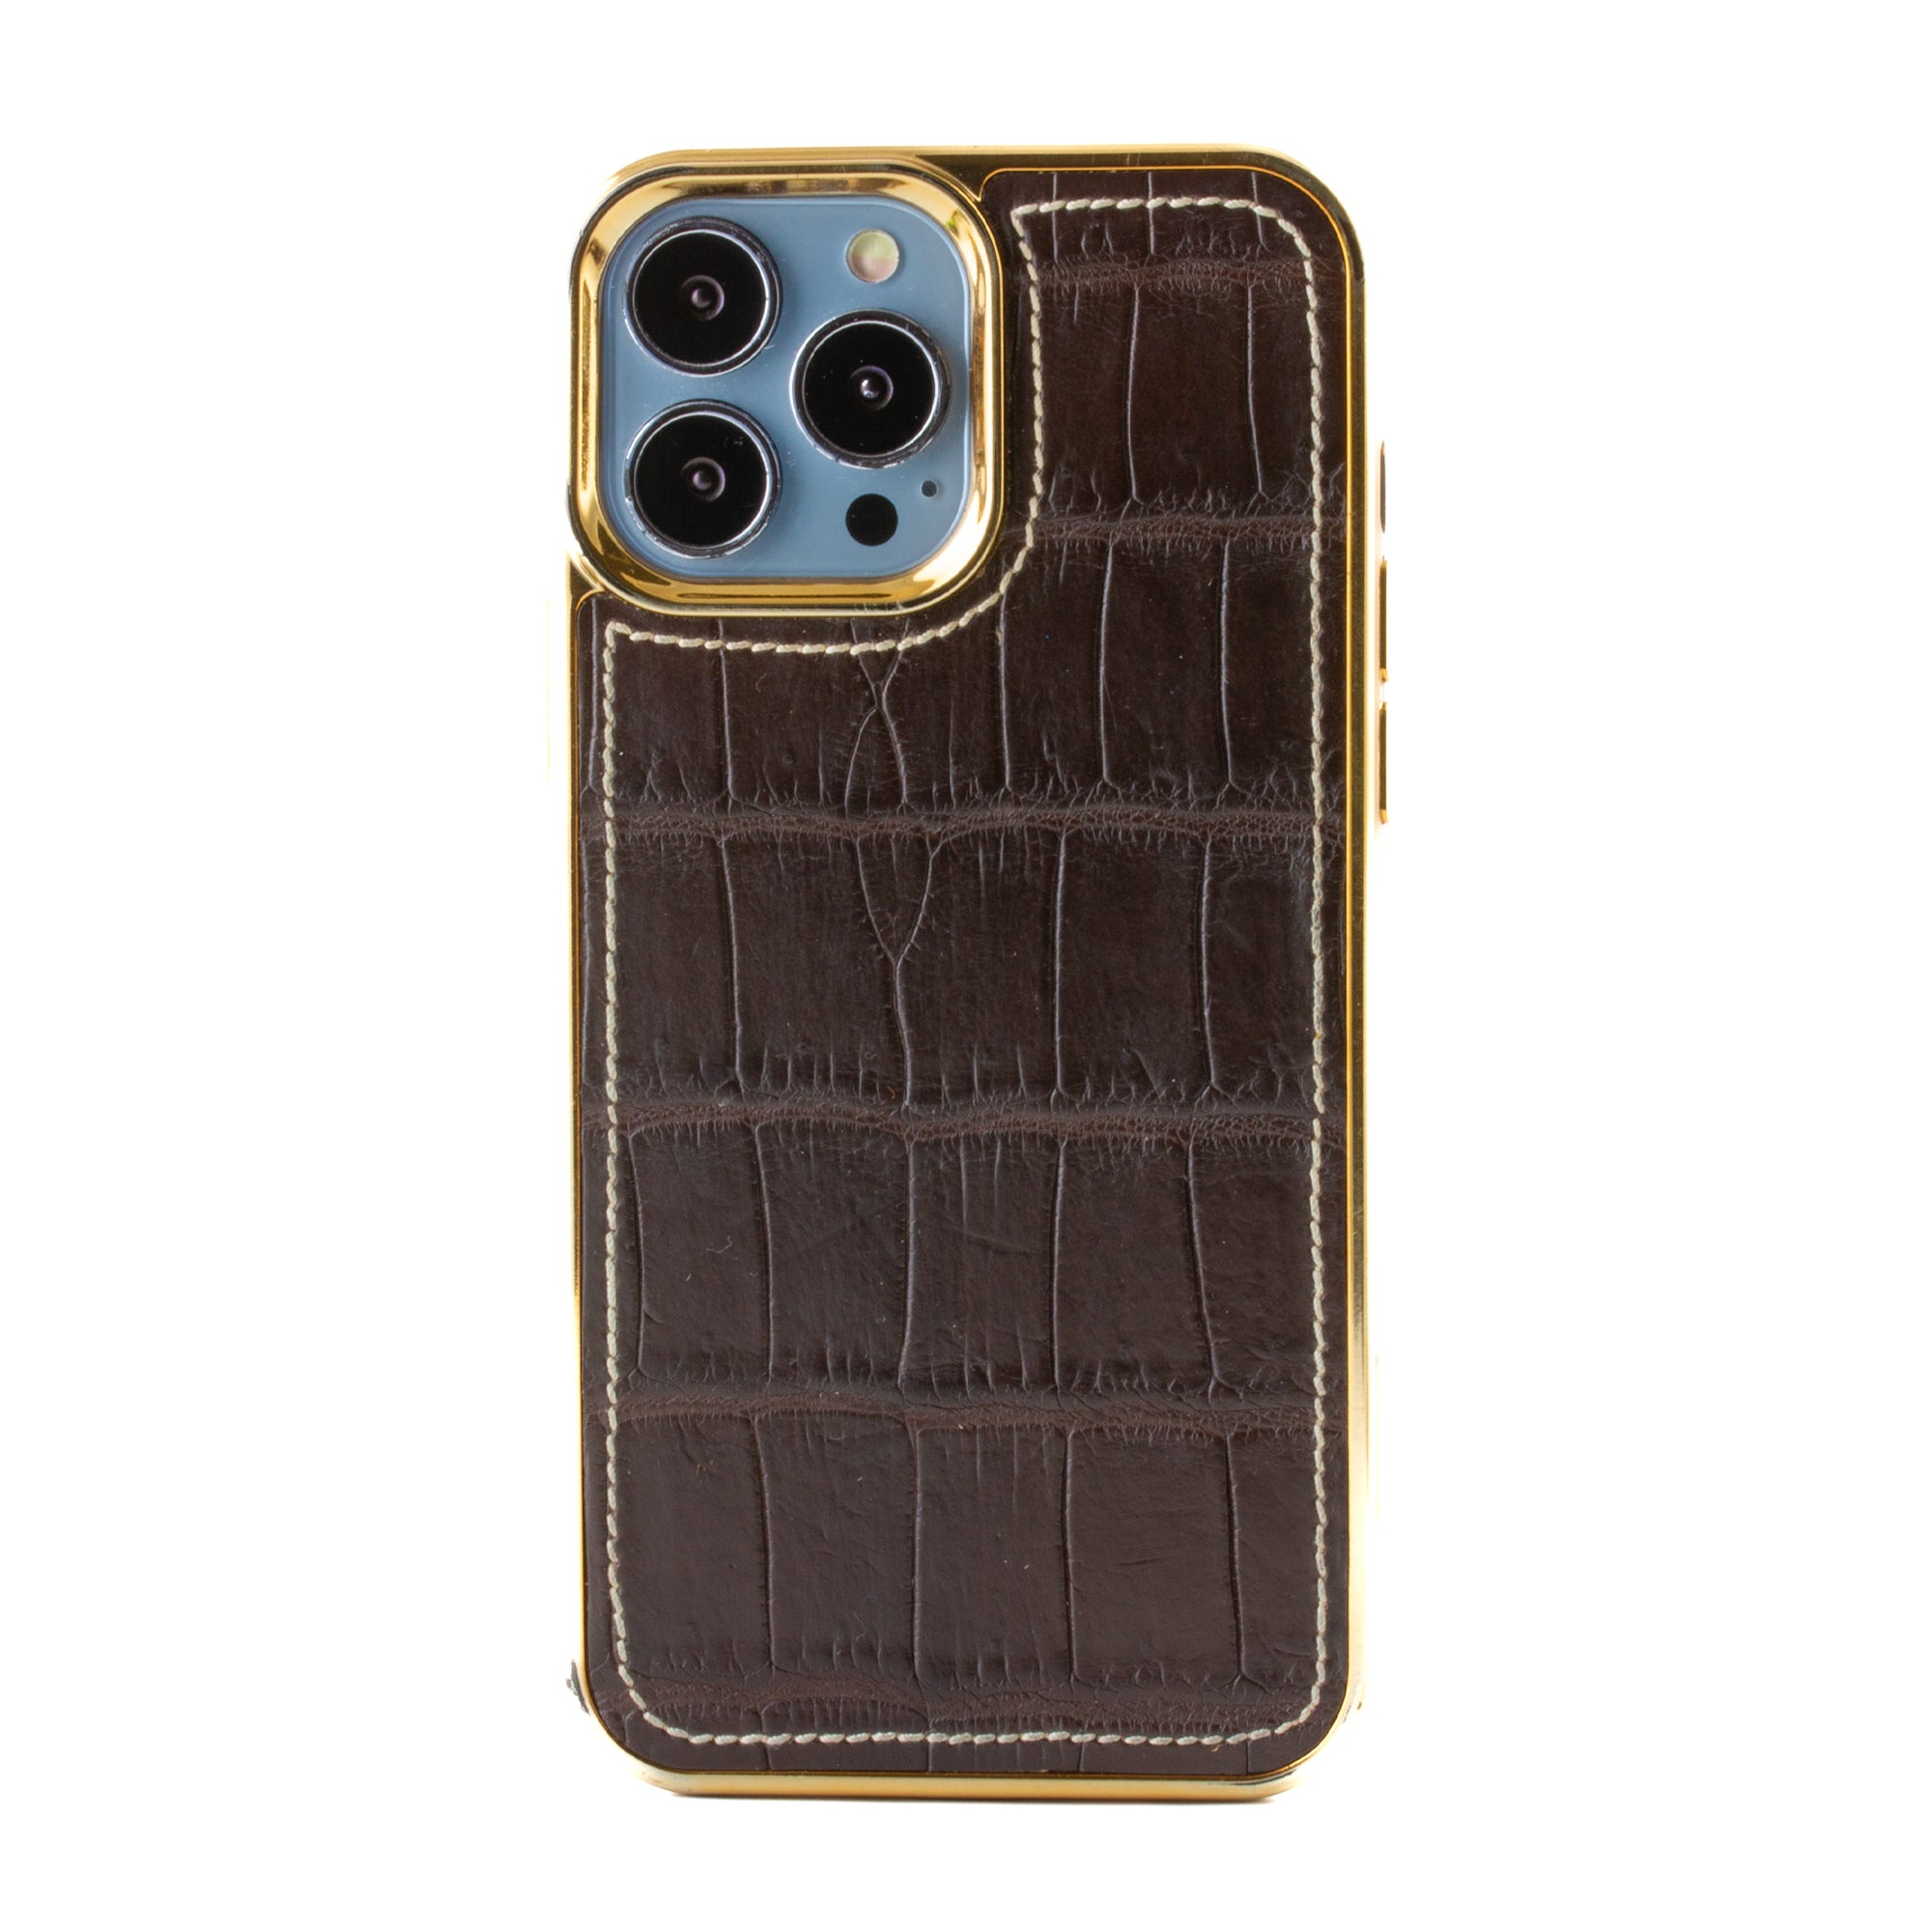 Vente exclusive - Coque "Sport case" cuir pour iPhone 13 Pro Max - Alligator marron 2